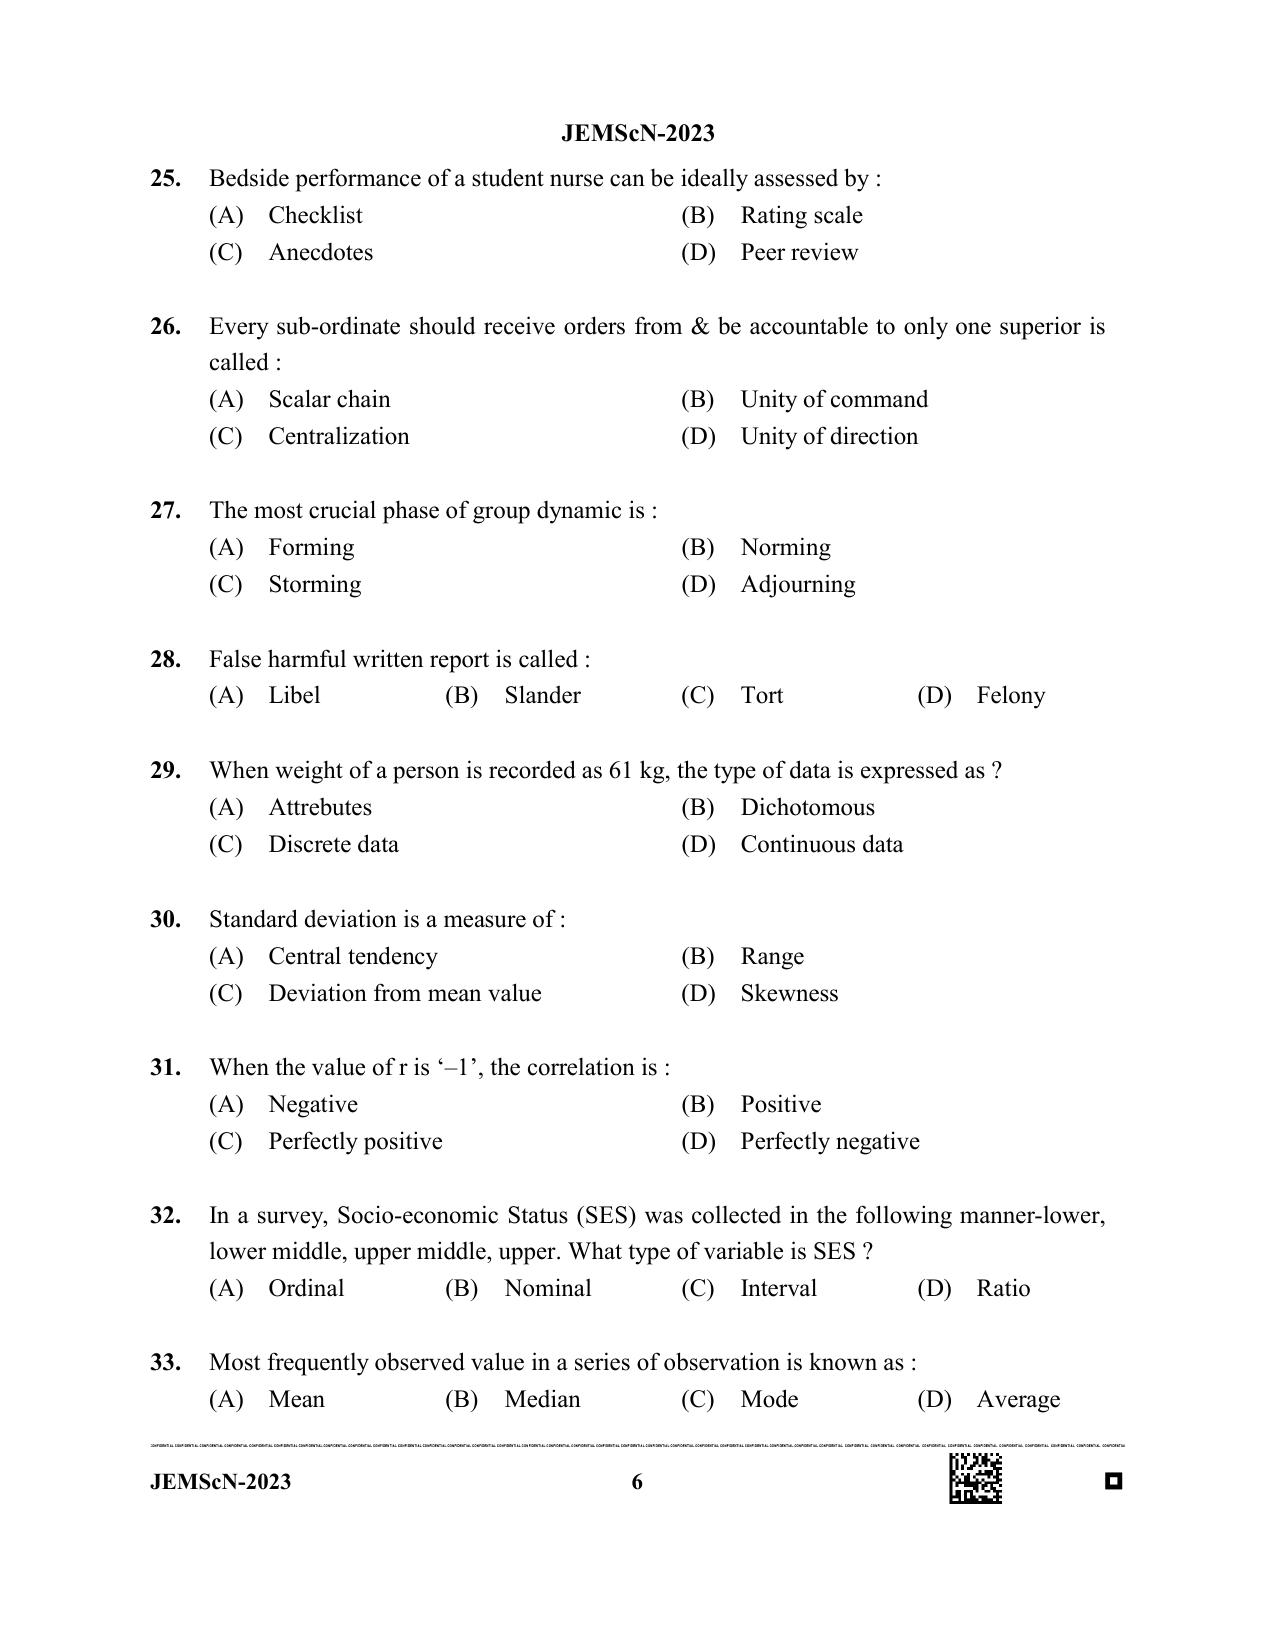 WB JEMScN 2023 Question Paper - Page 6